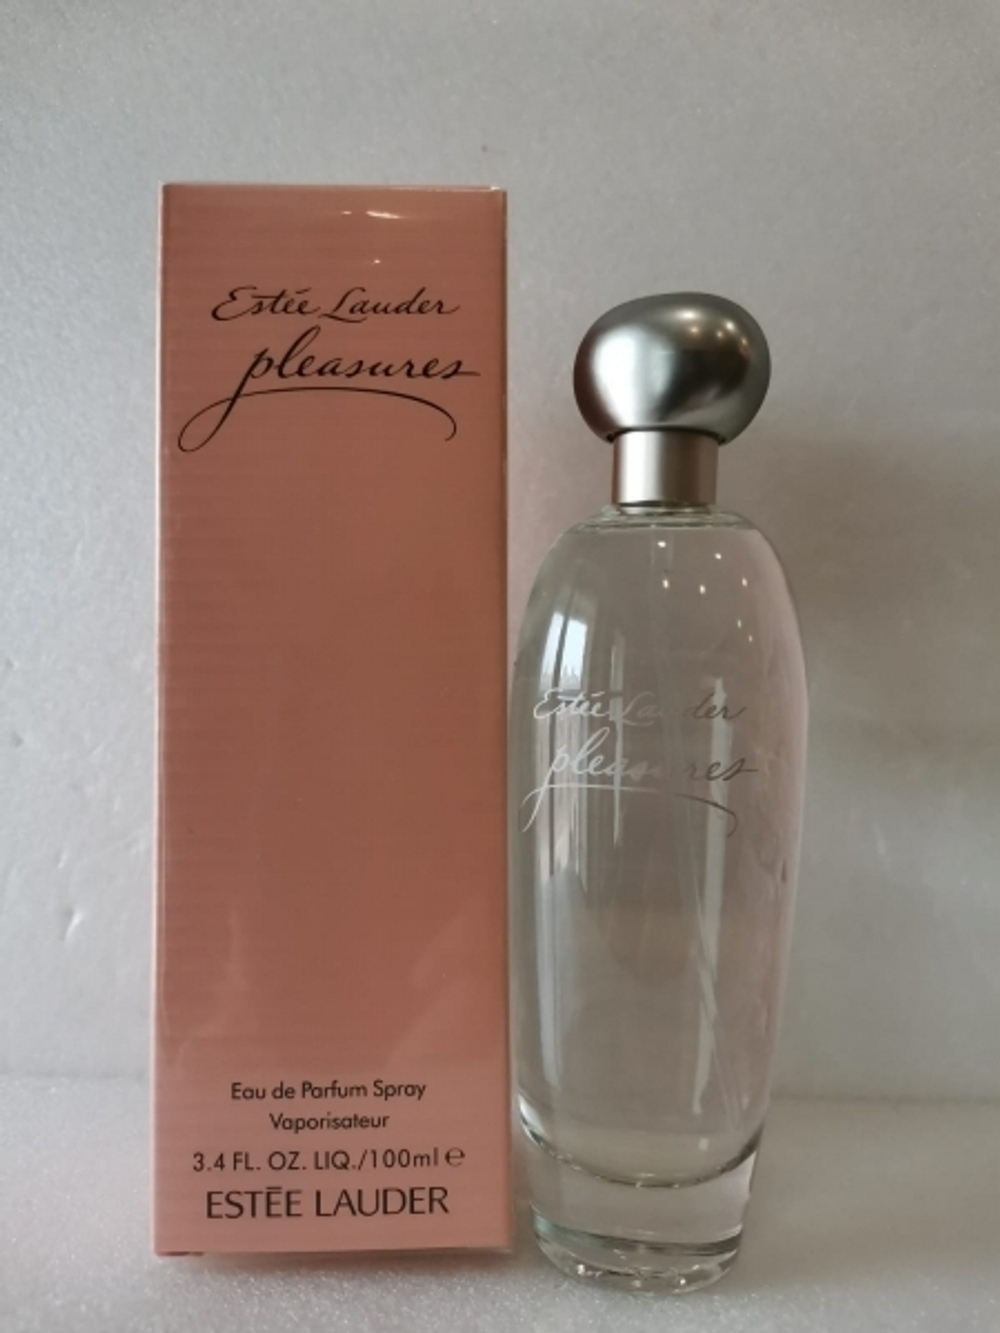 Estee Lauder Pleasures 100 ml (duty free парфюмерия)